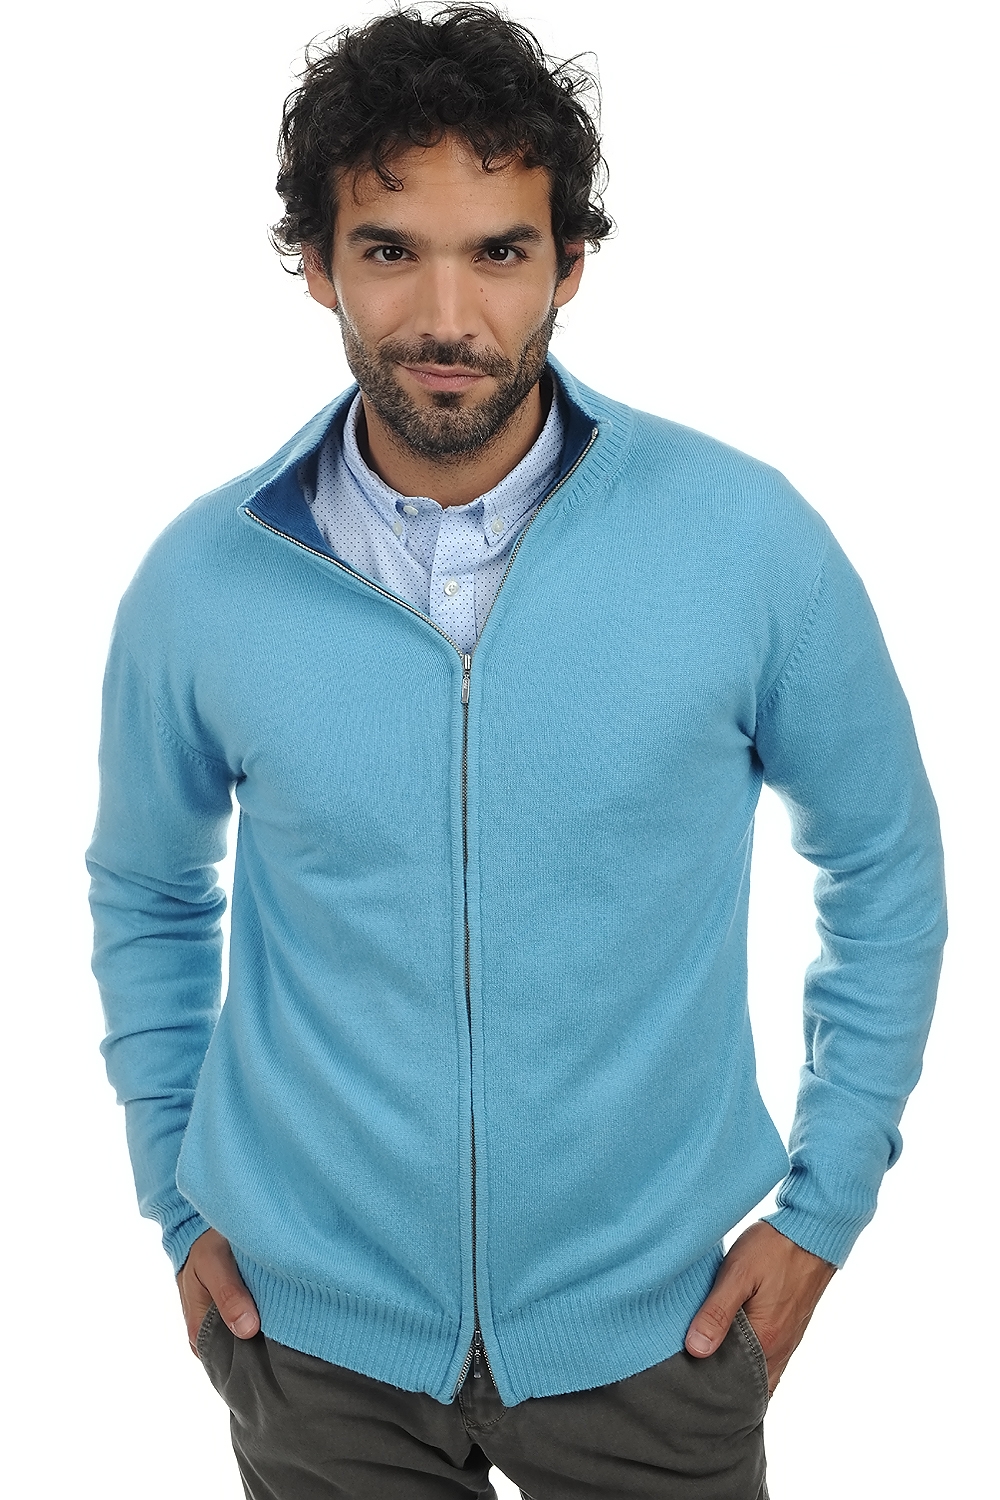 Cashmere men waistcoat sleeveless sweaters ronald teal blue canard blue 3xl